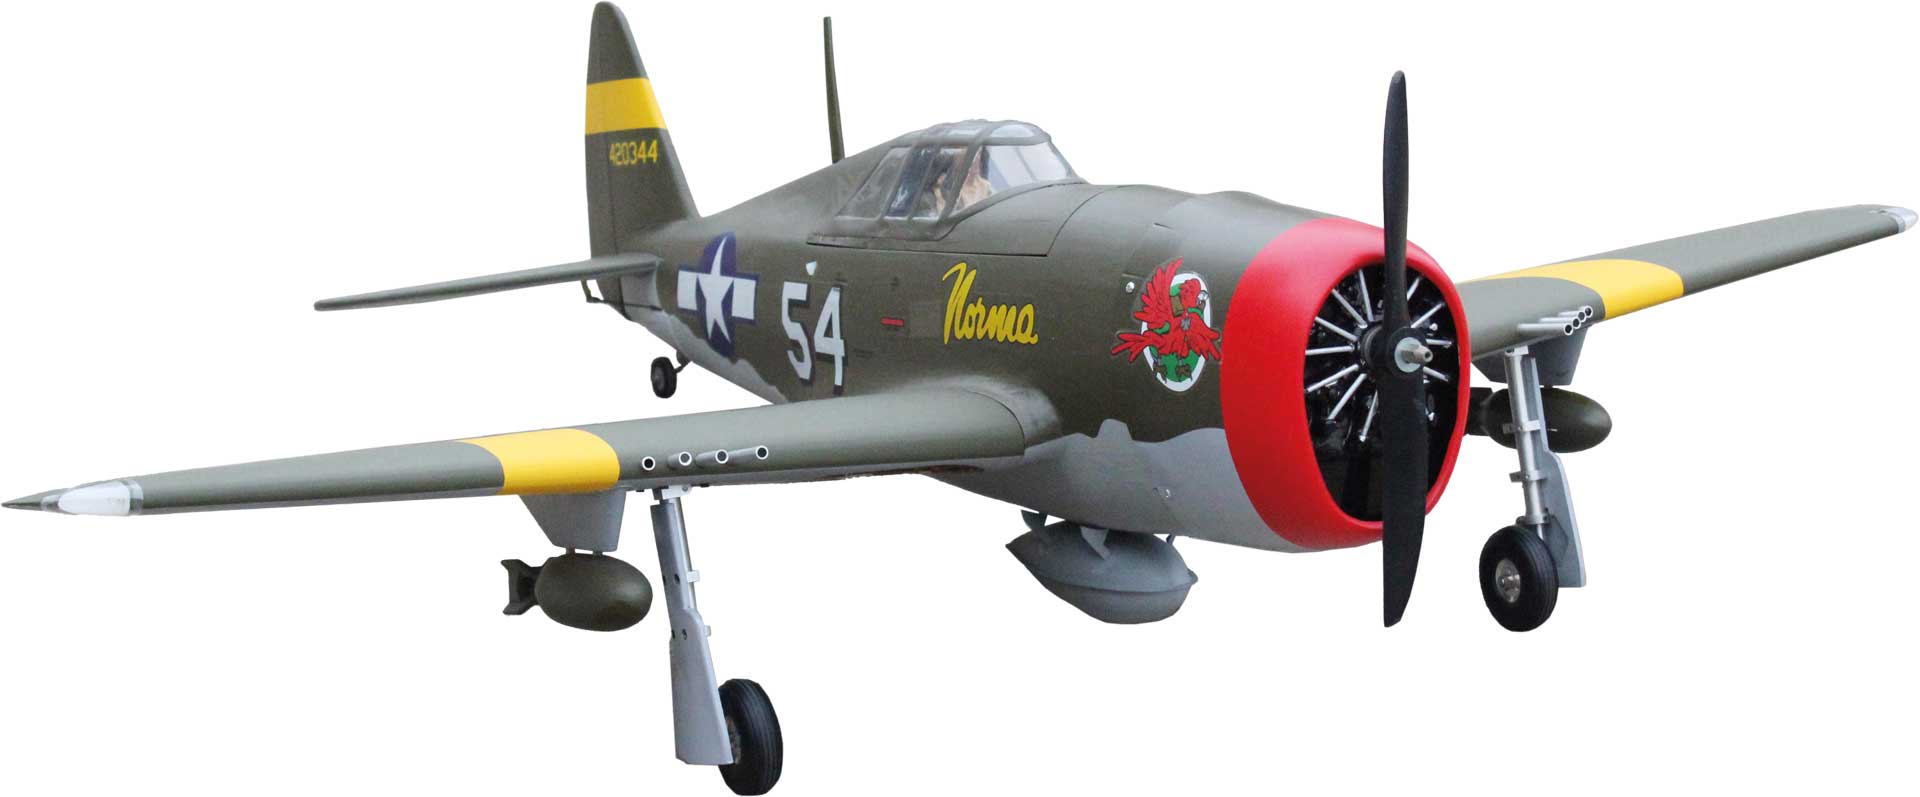 Seagull Models ( SG-Models ) P-47D Little Bunny MK-II 10ccm 55" with retractable landing gear ARF Warbird